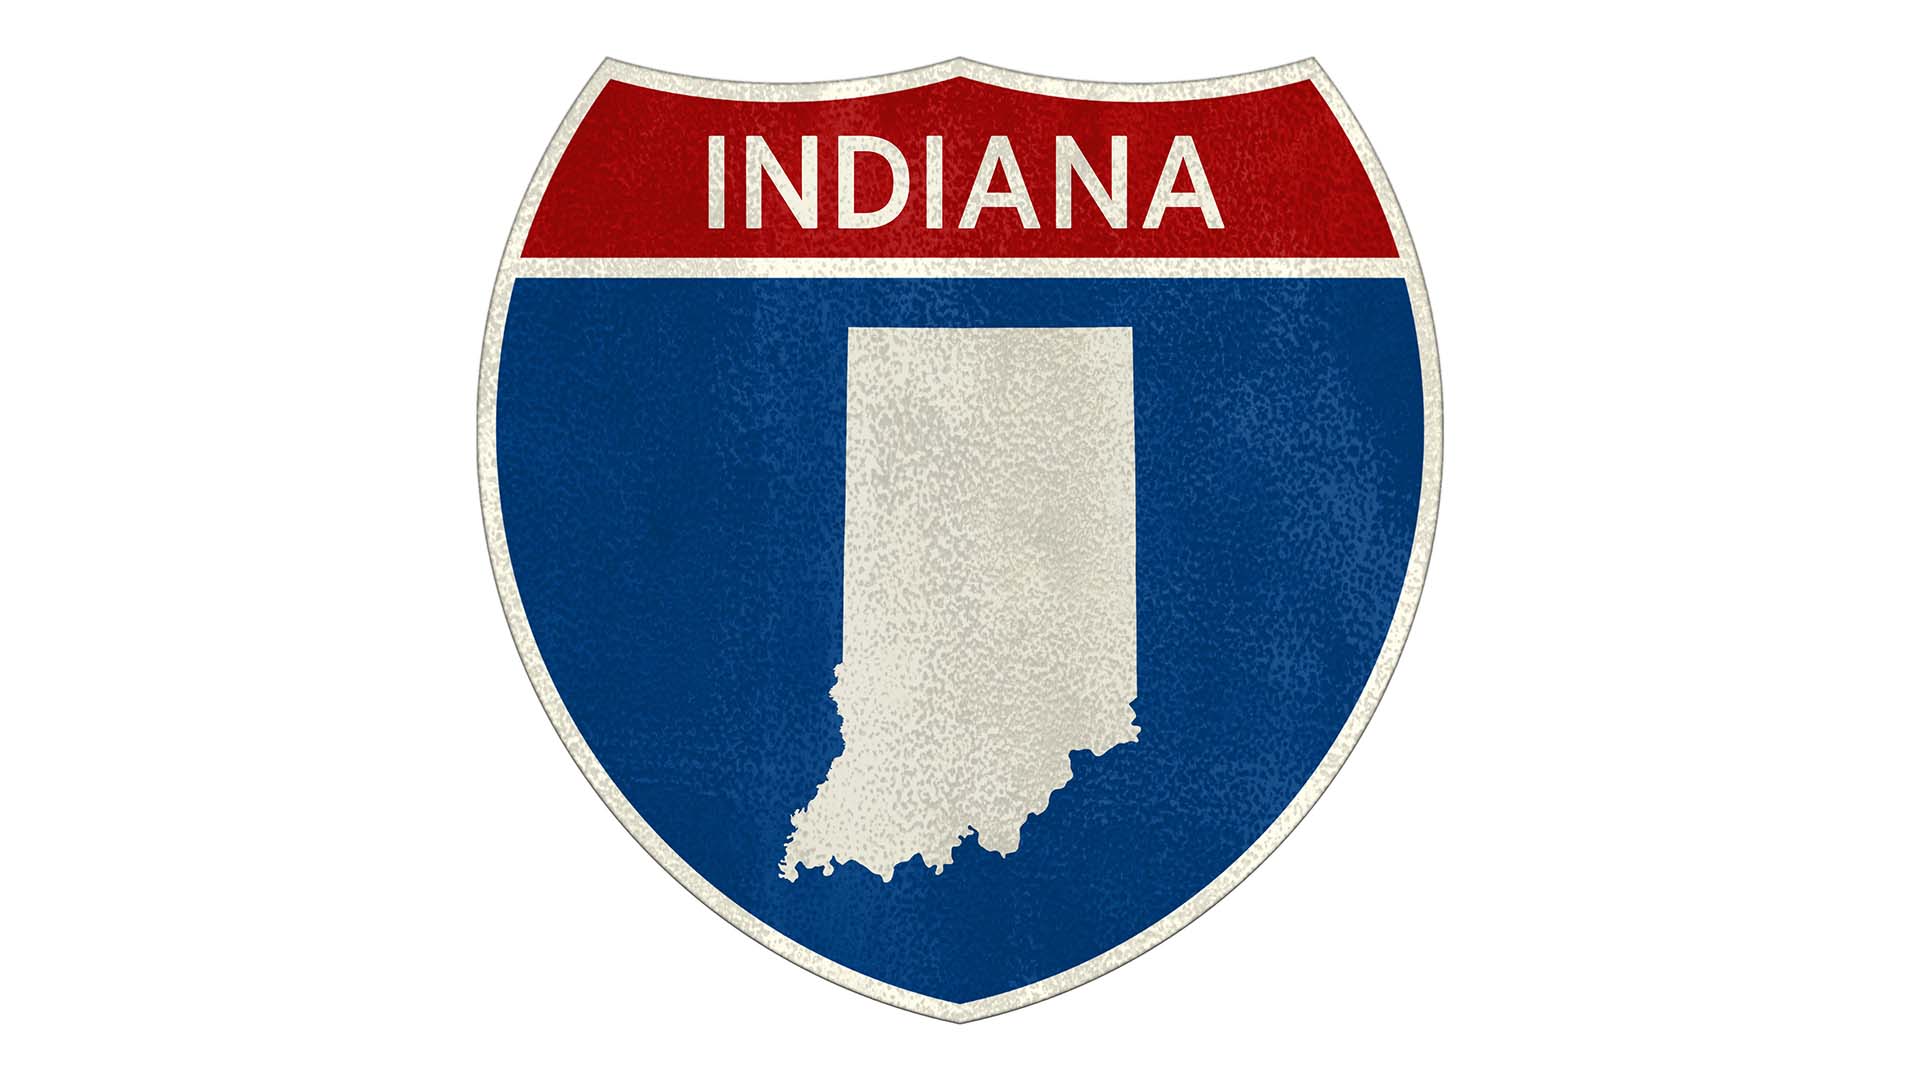 Indiana state roadside sign